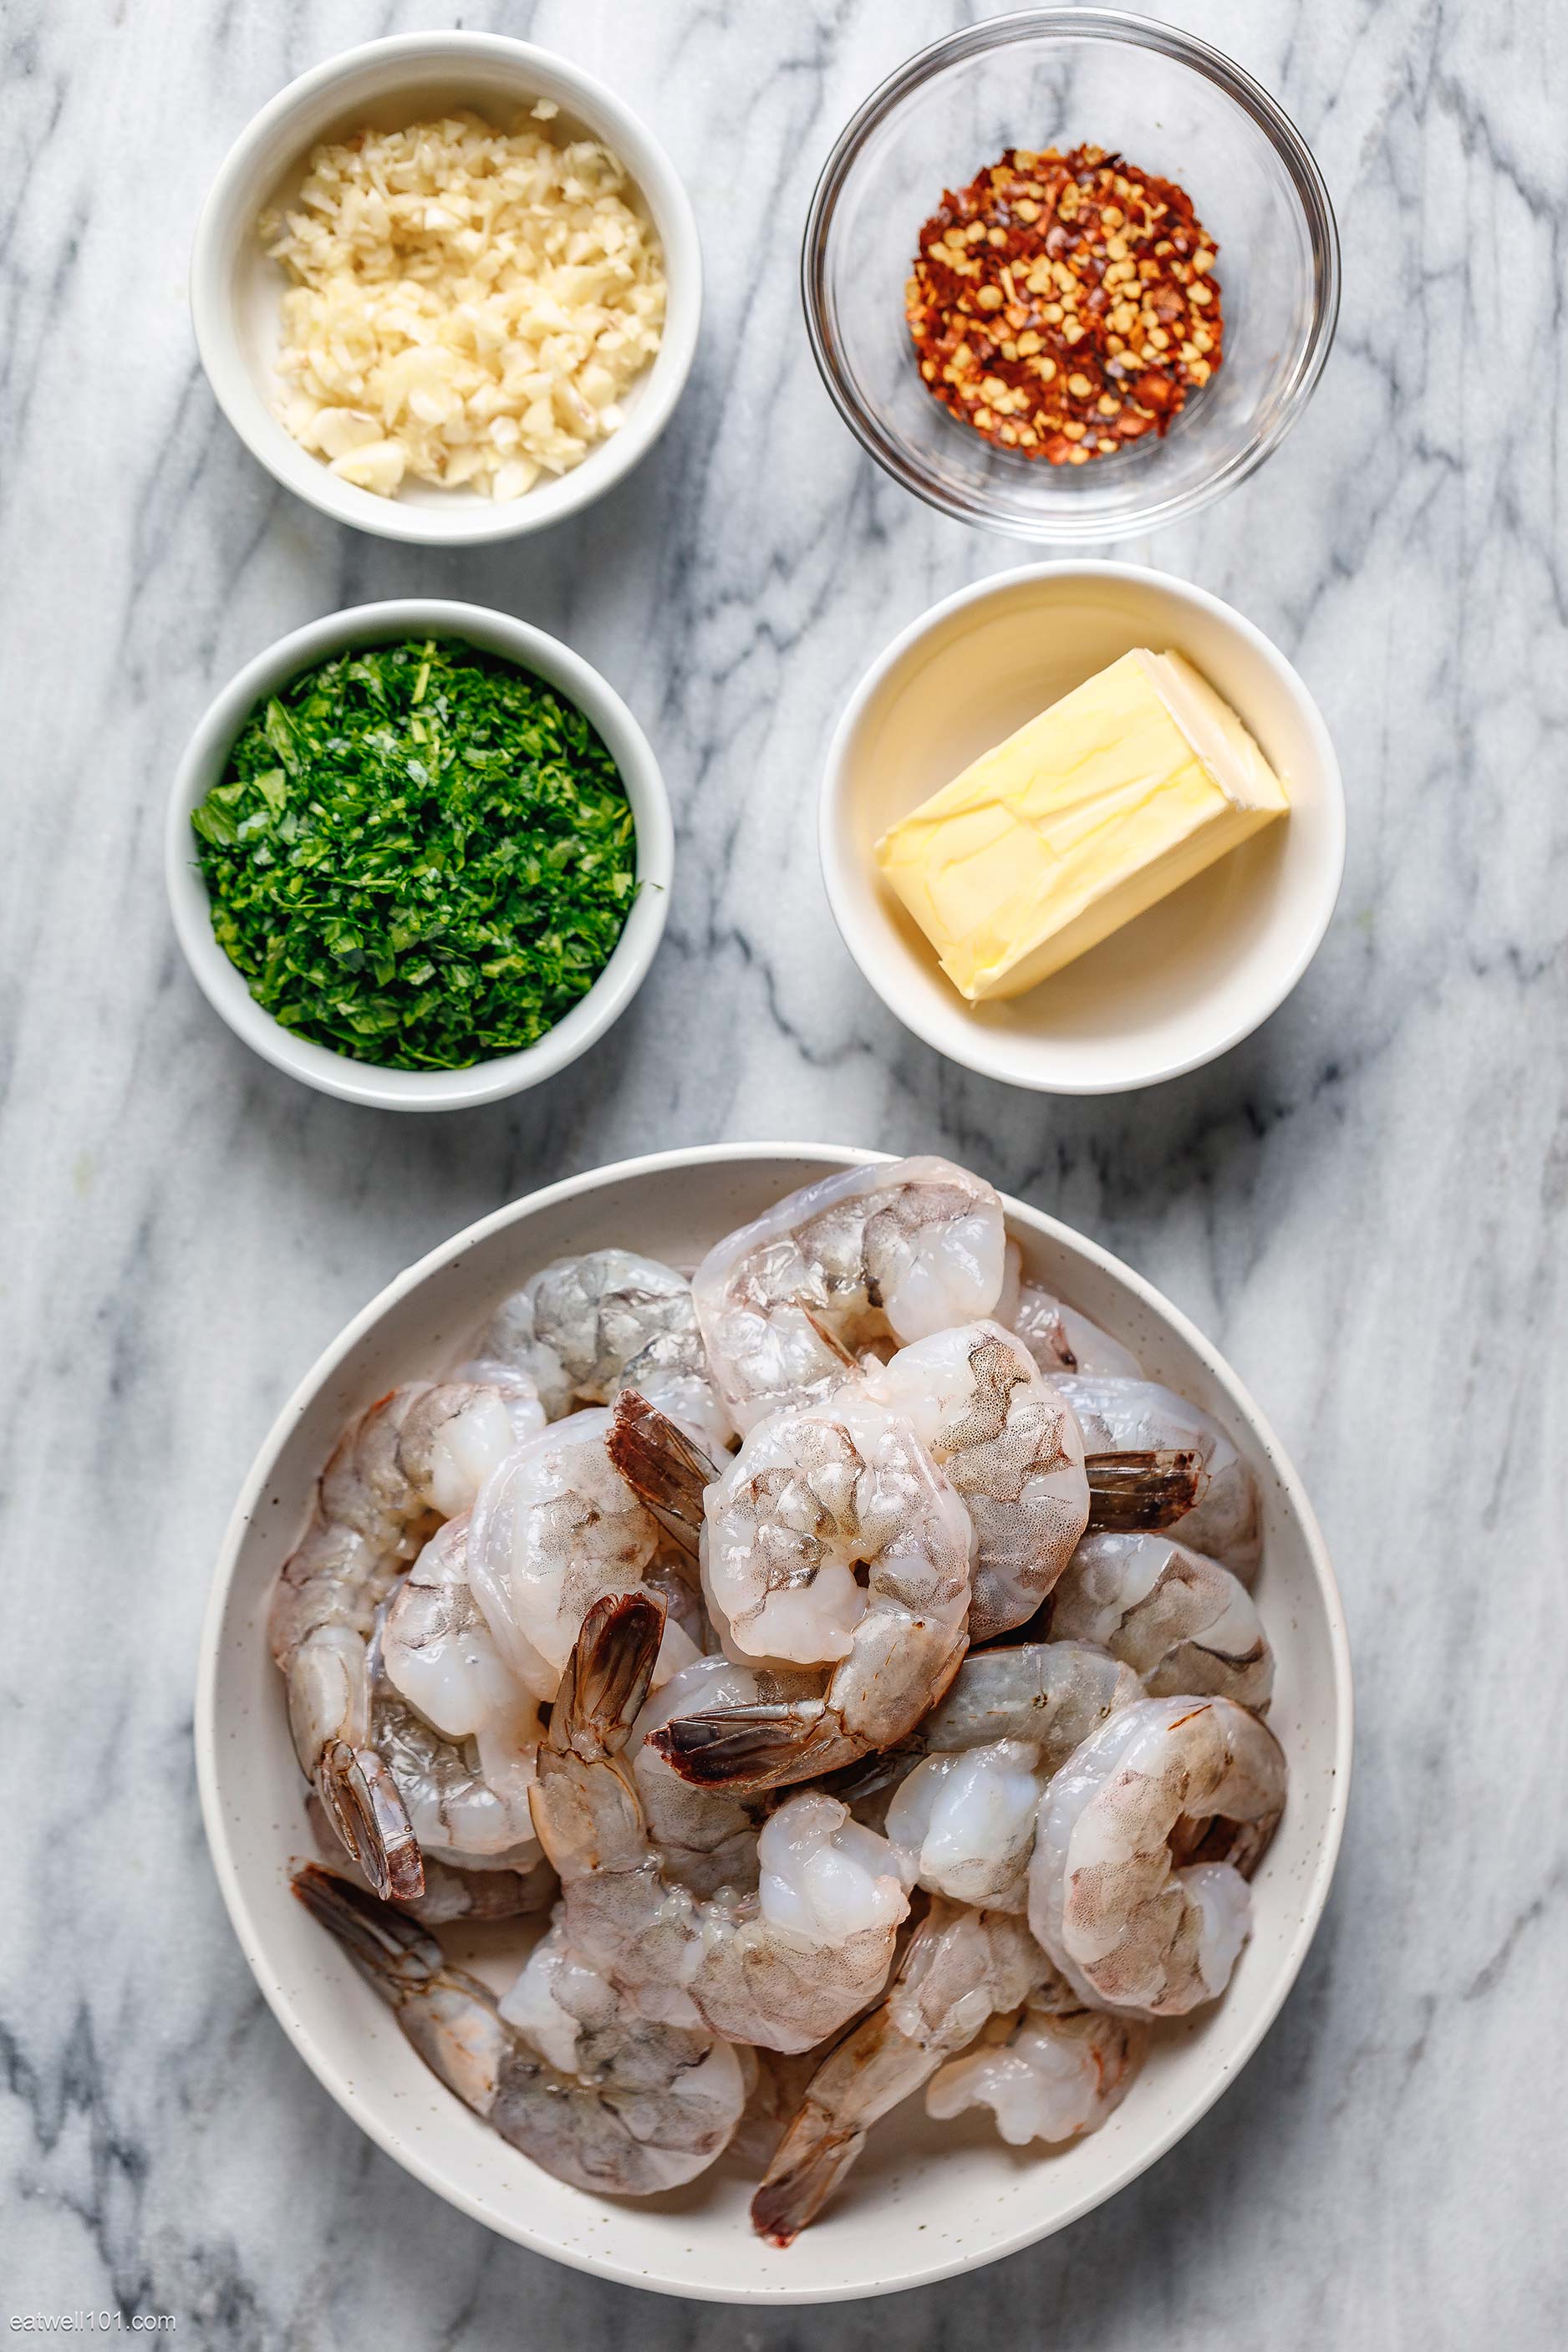 how to cook shrimp